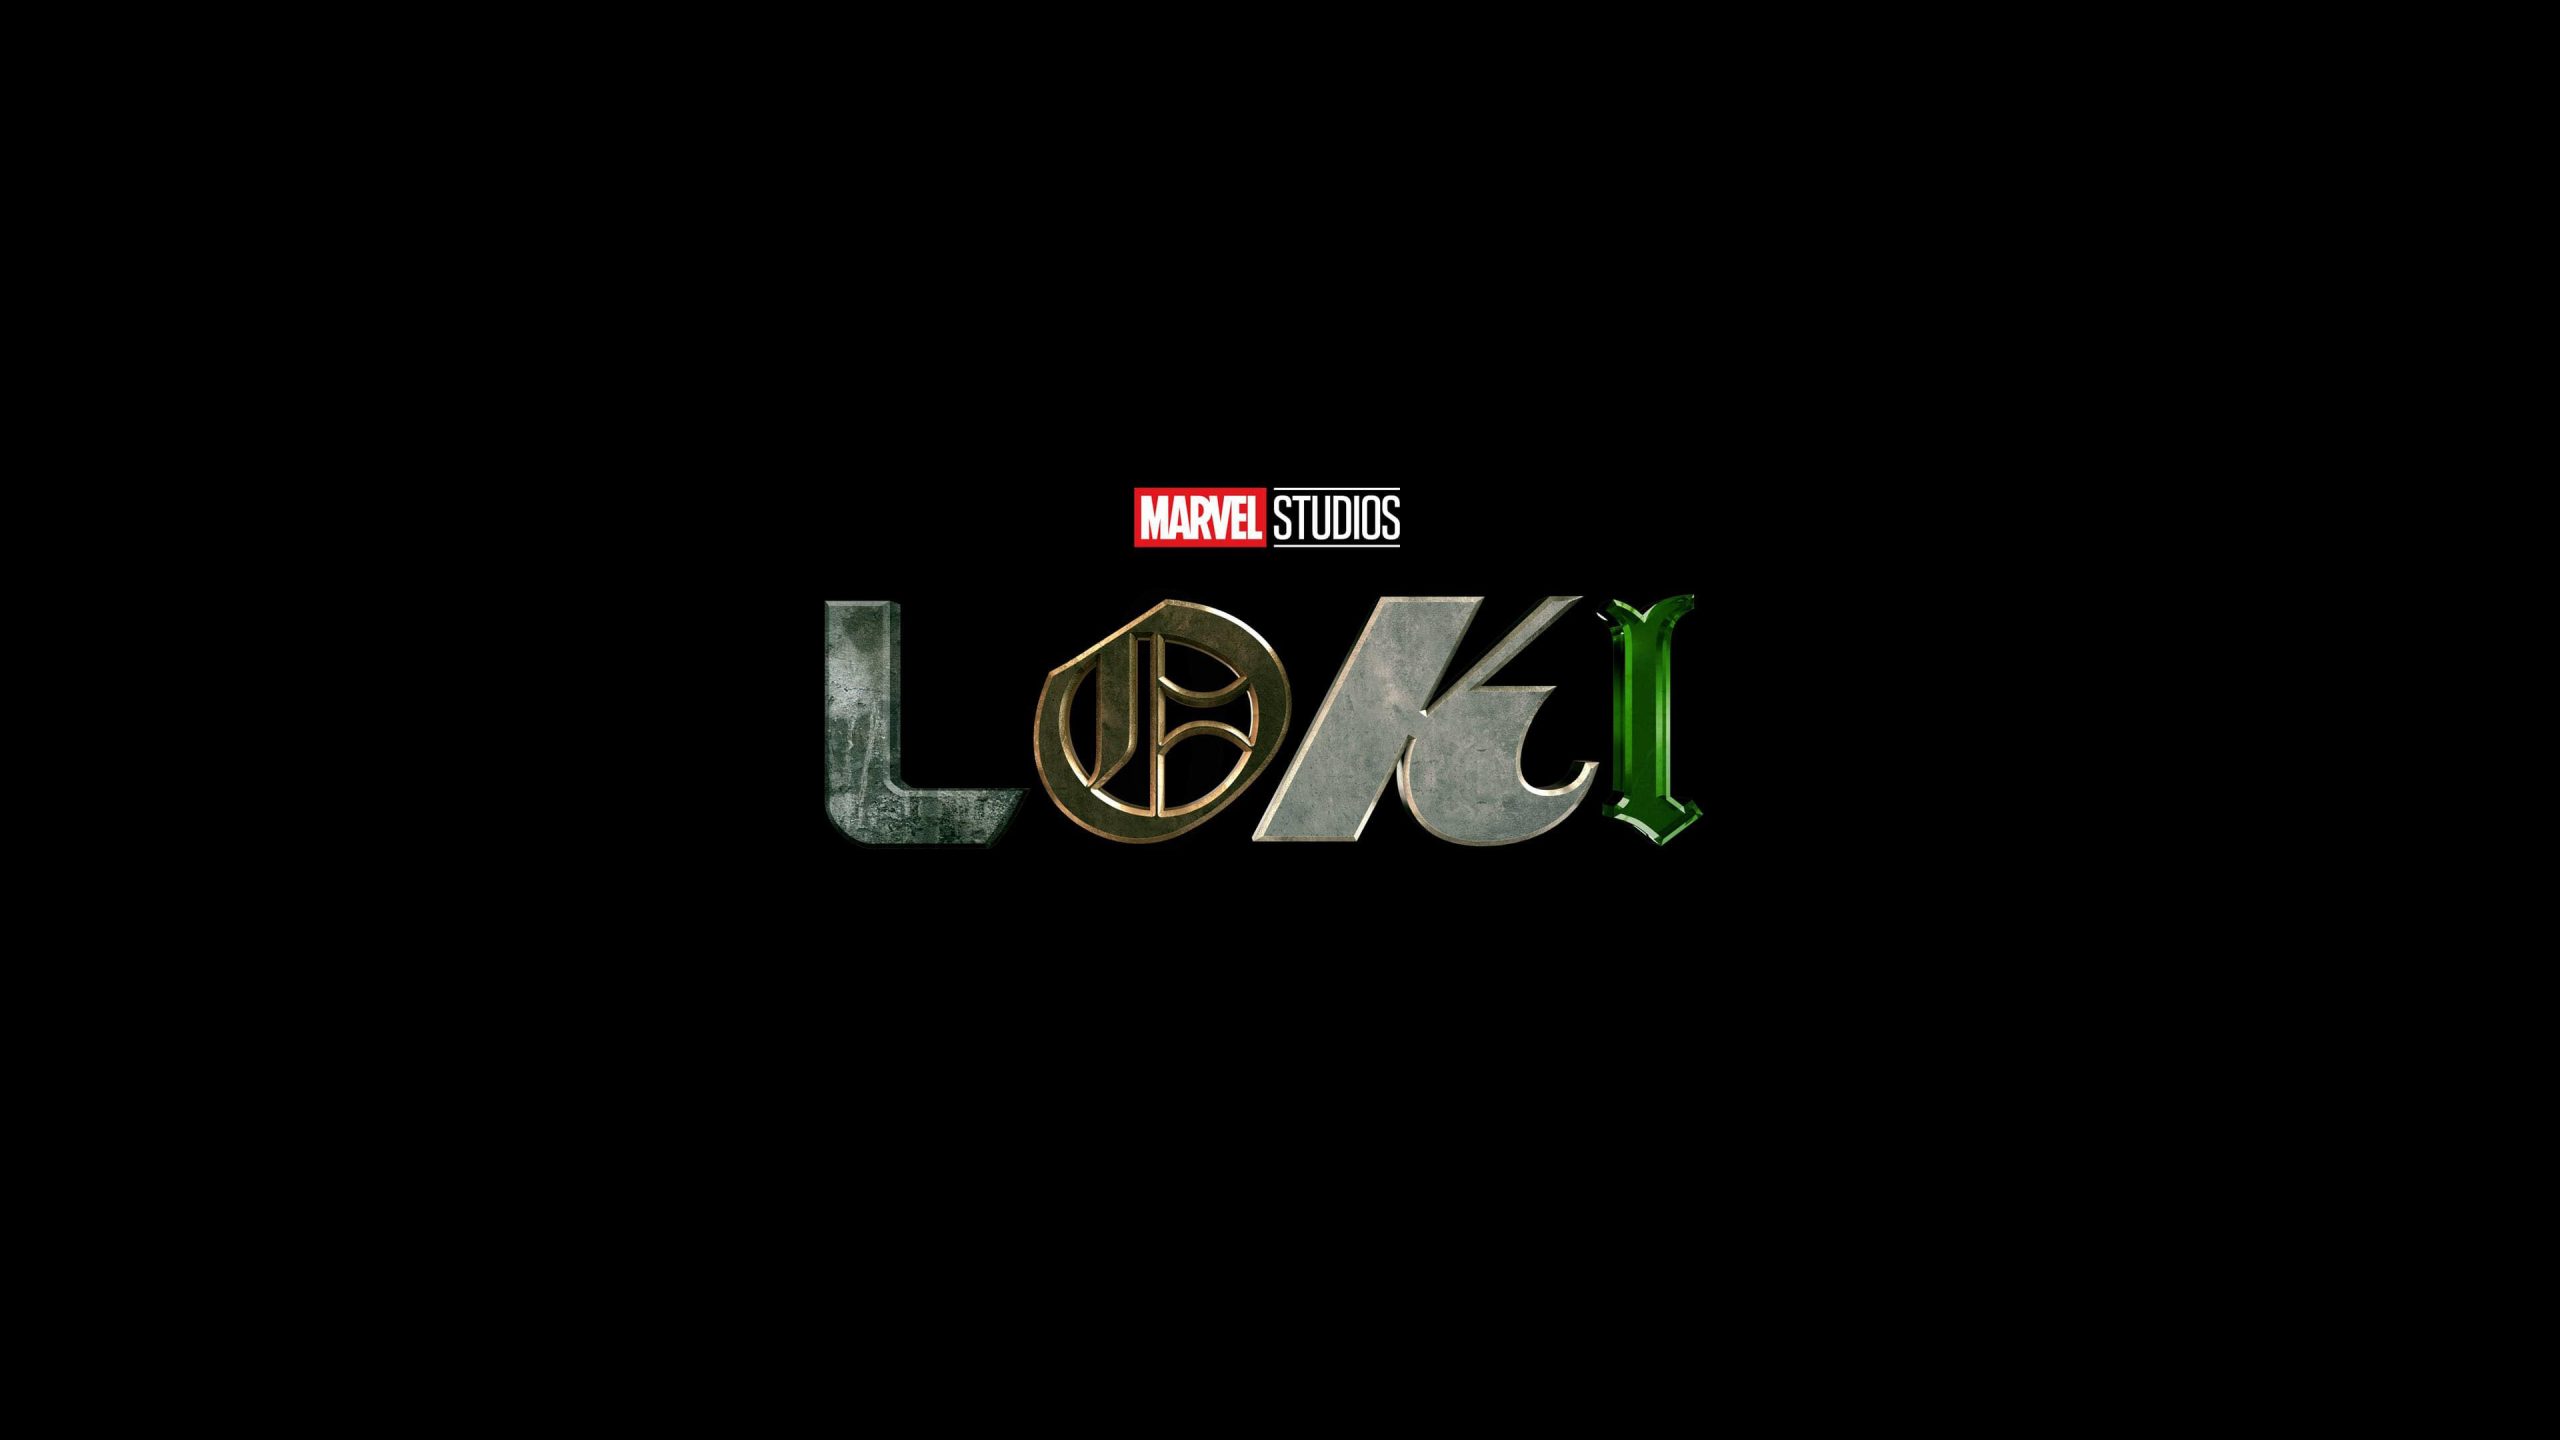 Loki season 2 cover